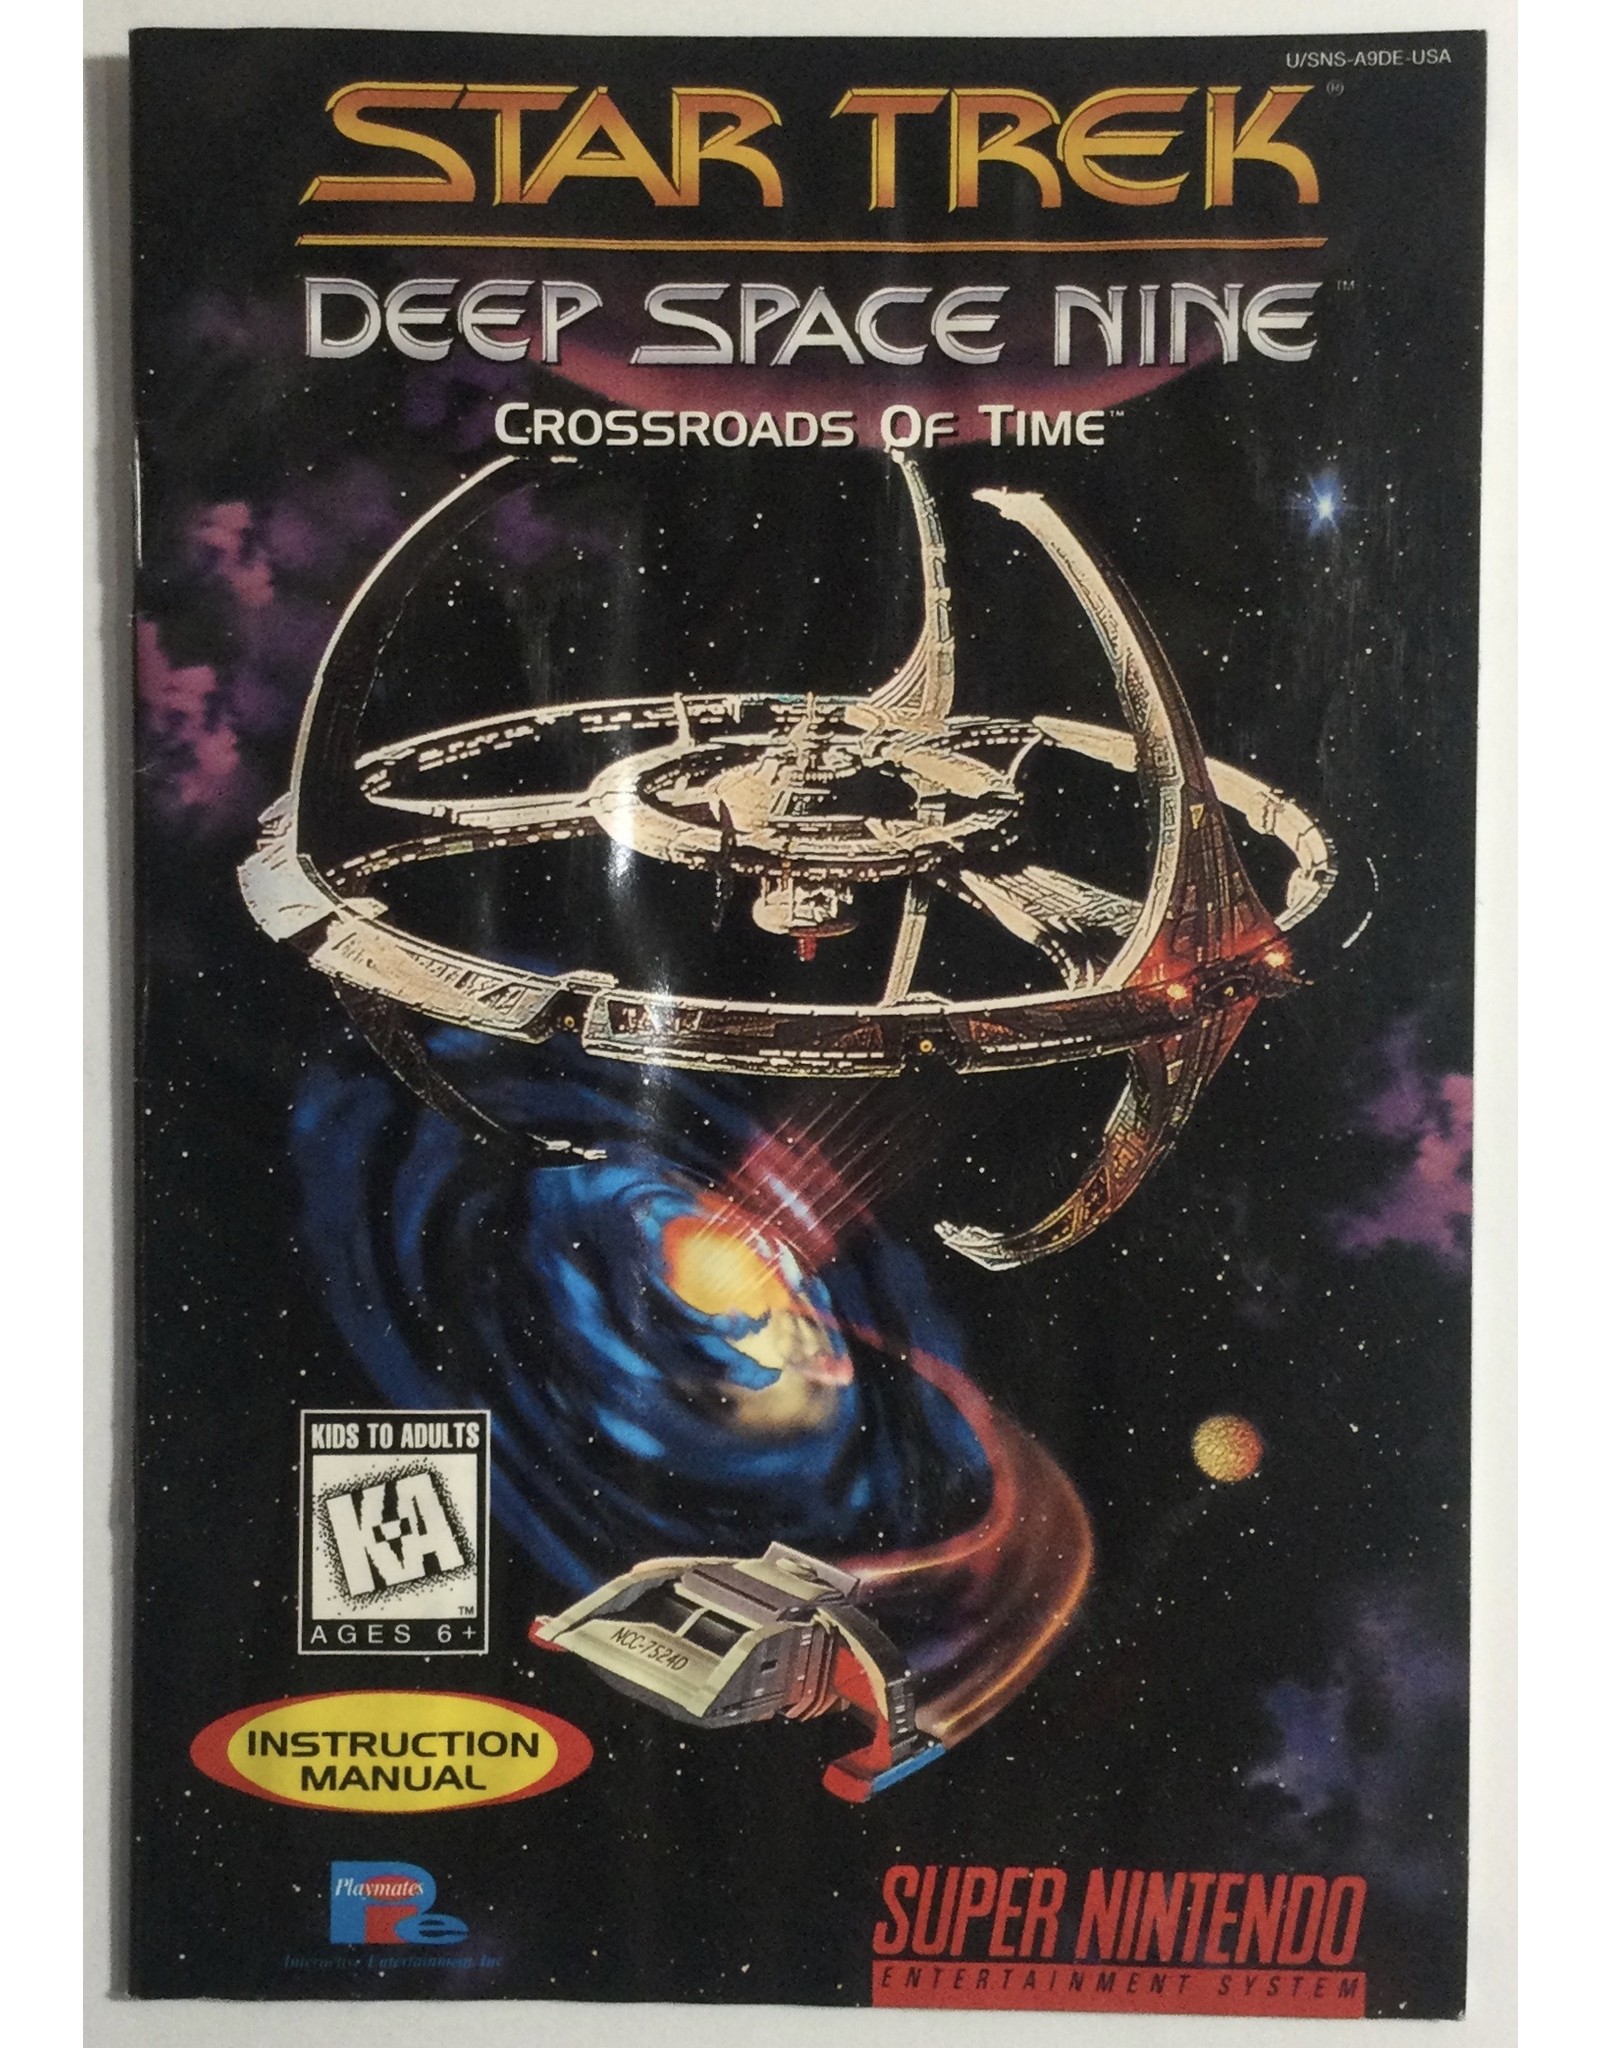 PLAYMATES Star Trek Deep Space Nine: Crossroads of Time for Super Nintendo Entertainment System (SNES)